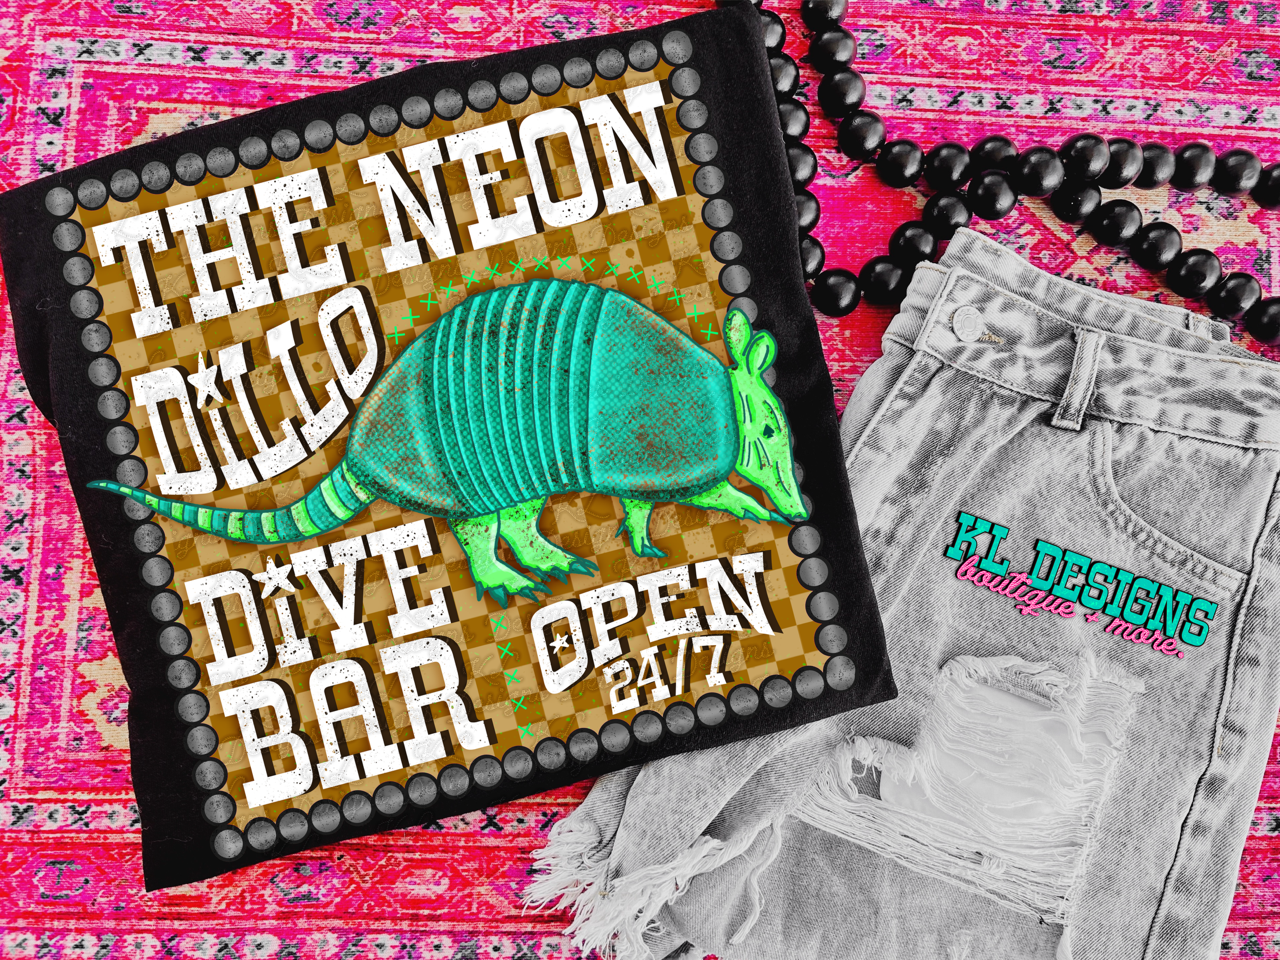 Neon Dillo Dive Bar - Digital Download